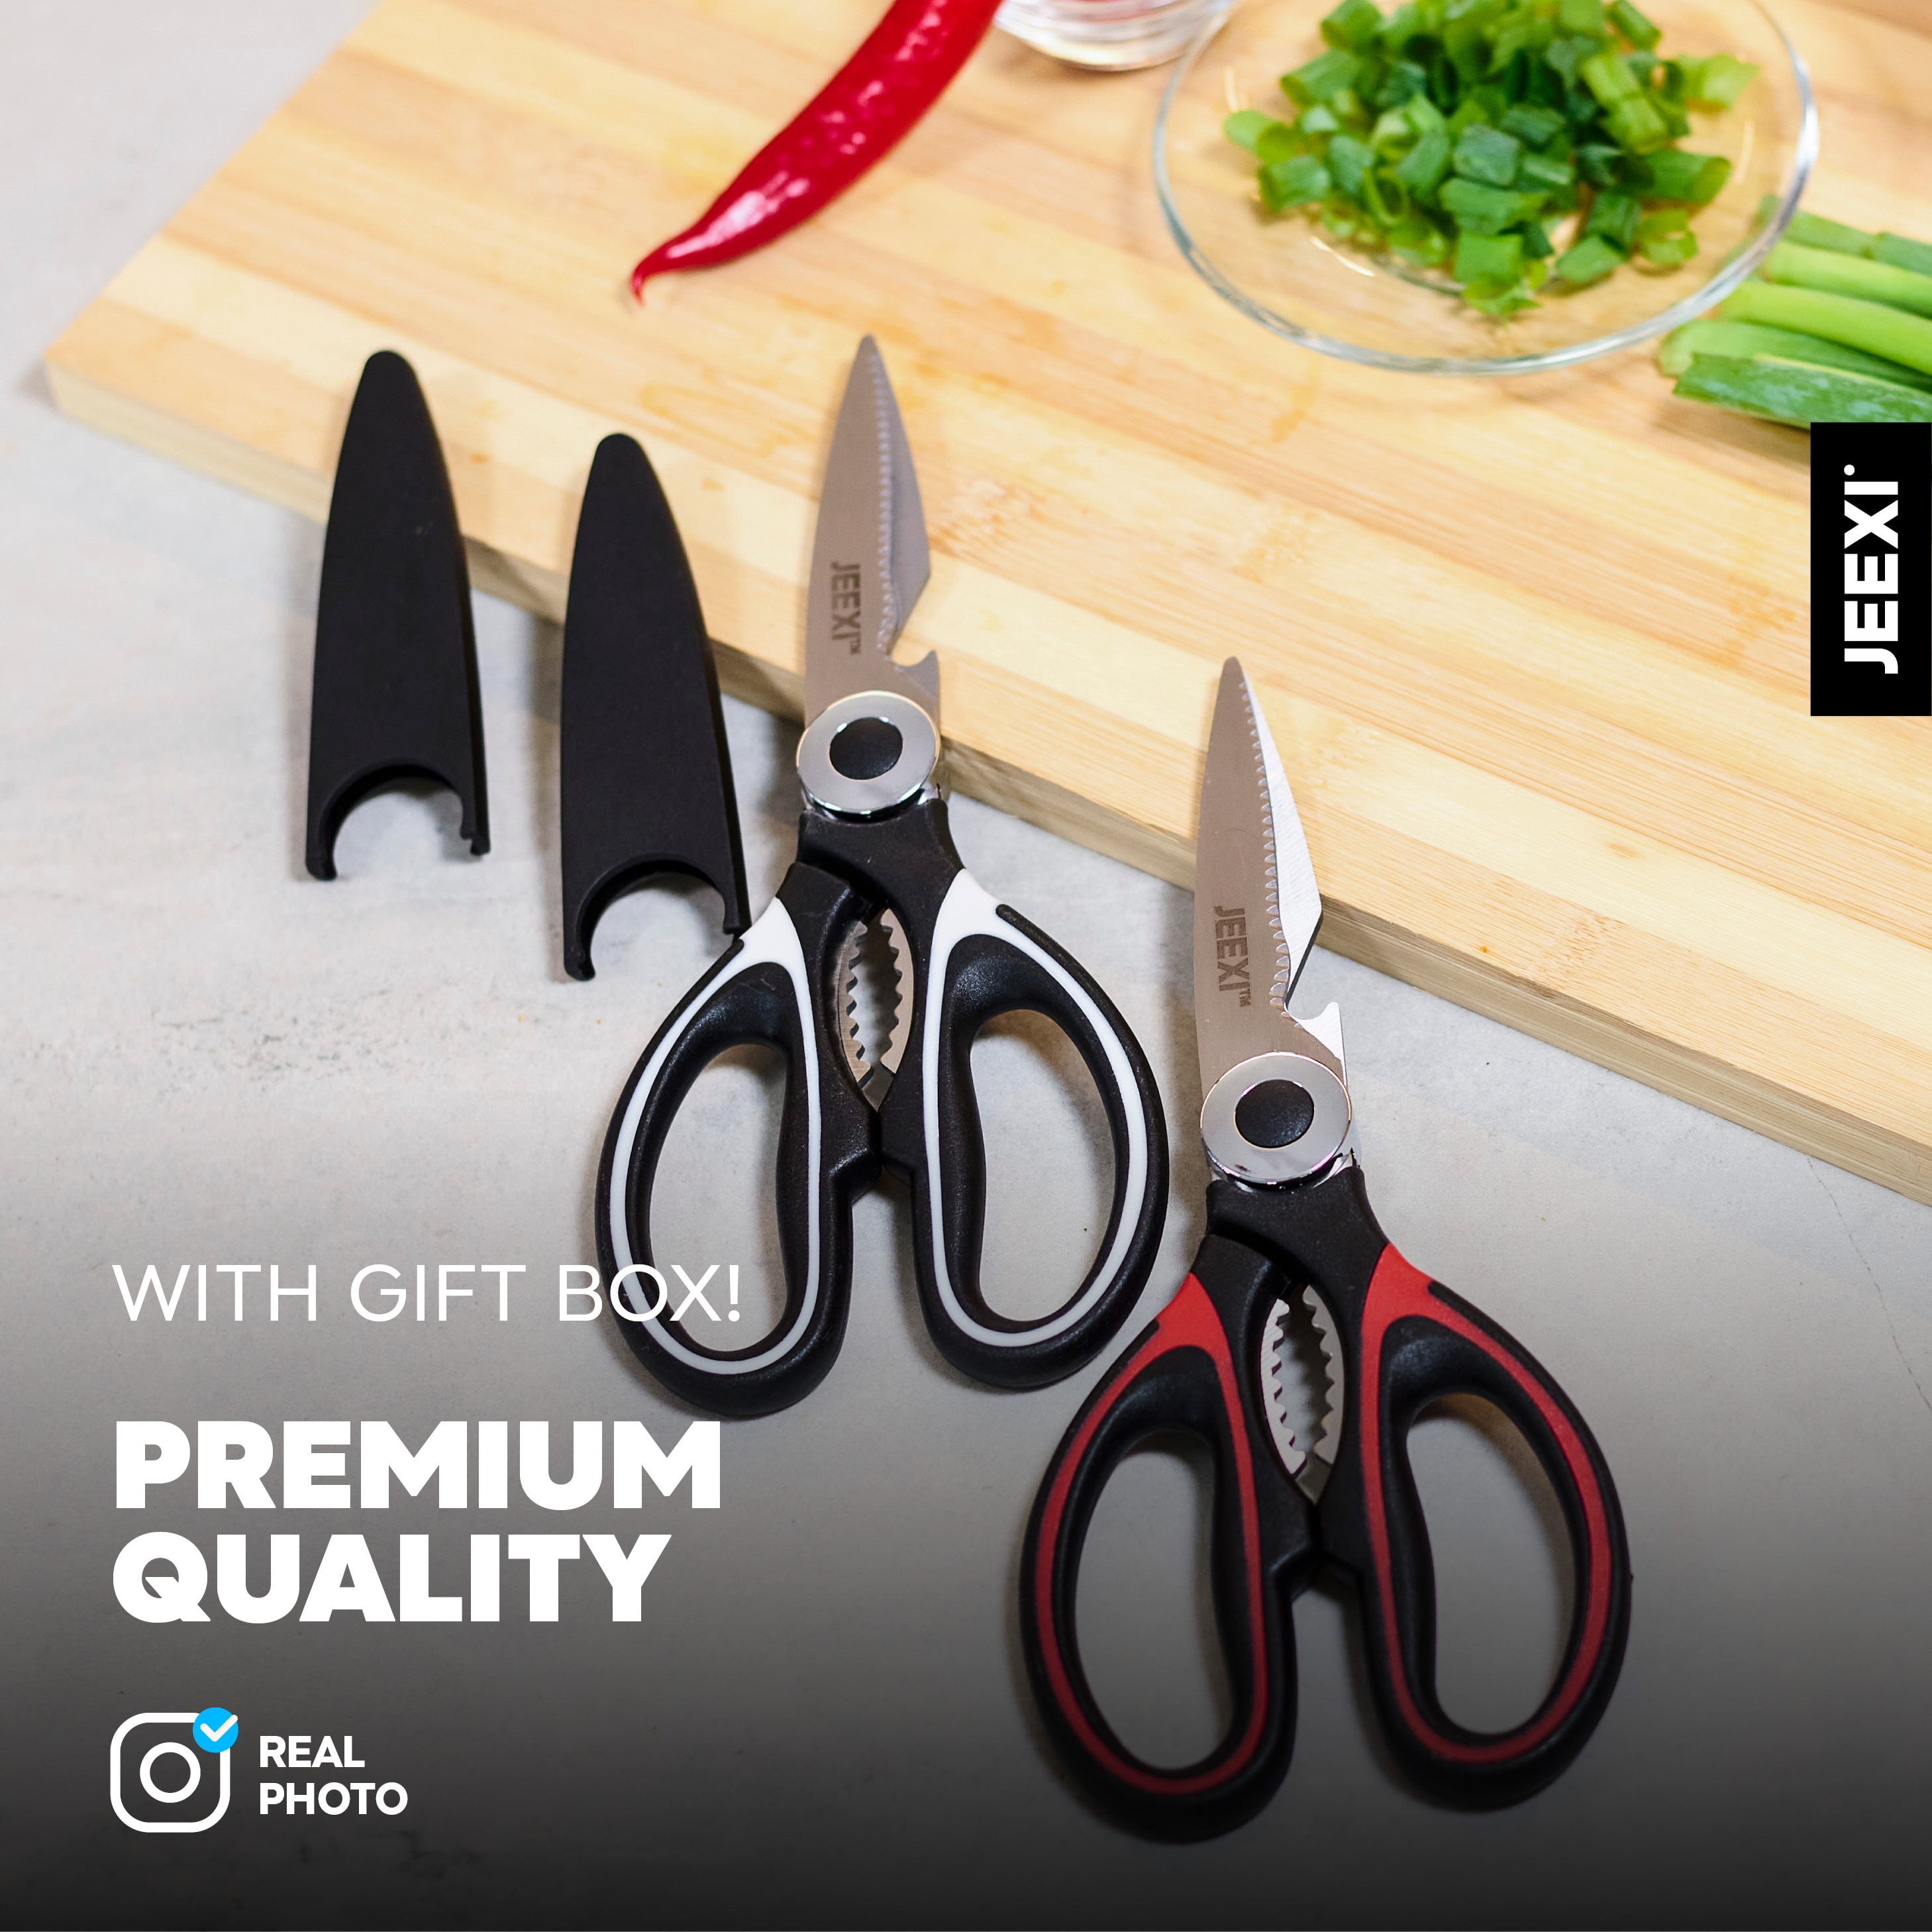 MAIRICO Ultra Sharp Premium Heavy Duty Kitchen Shears and Multi Purpose Scissors